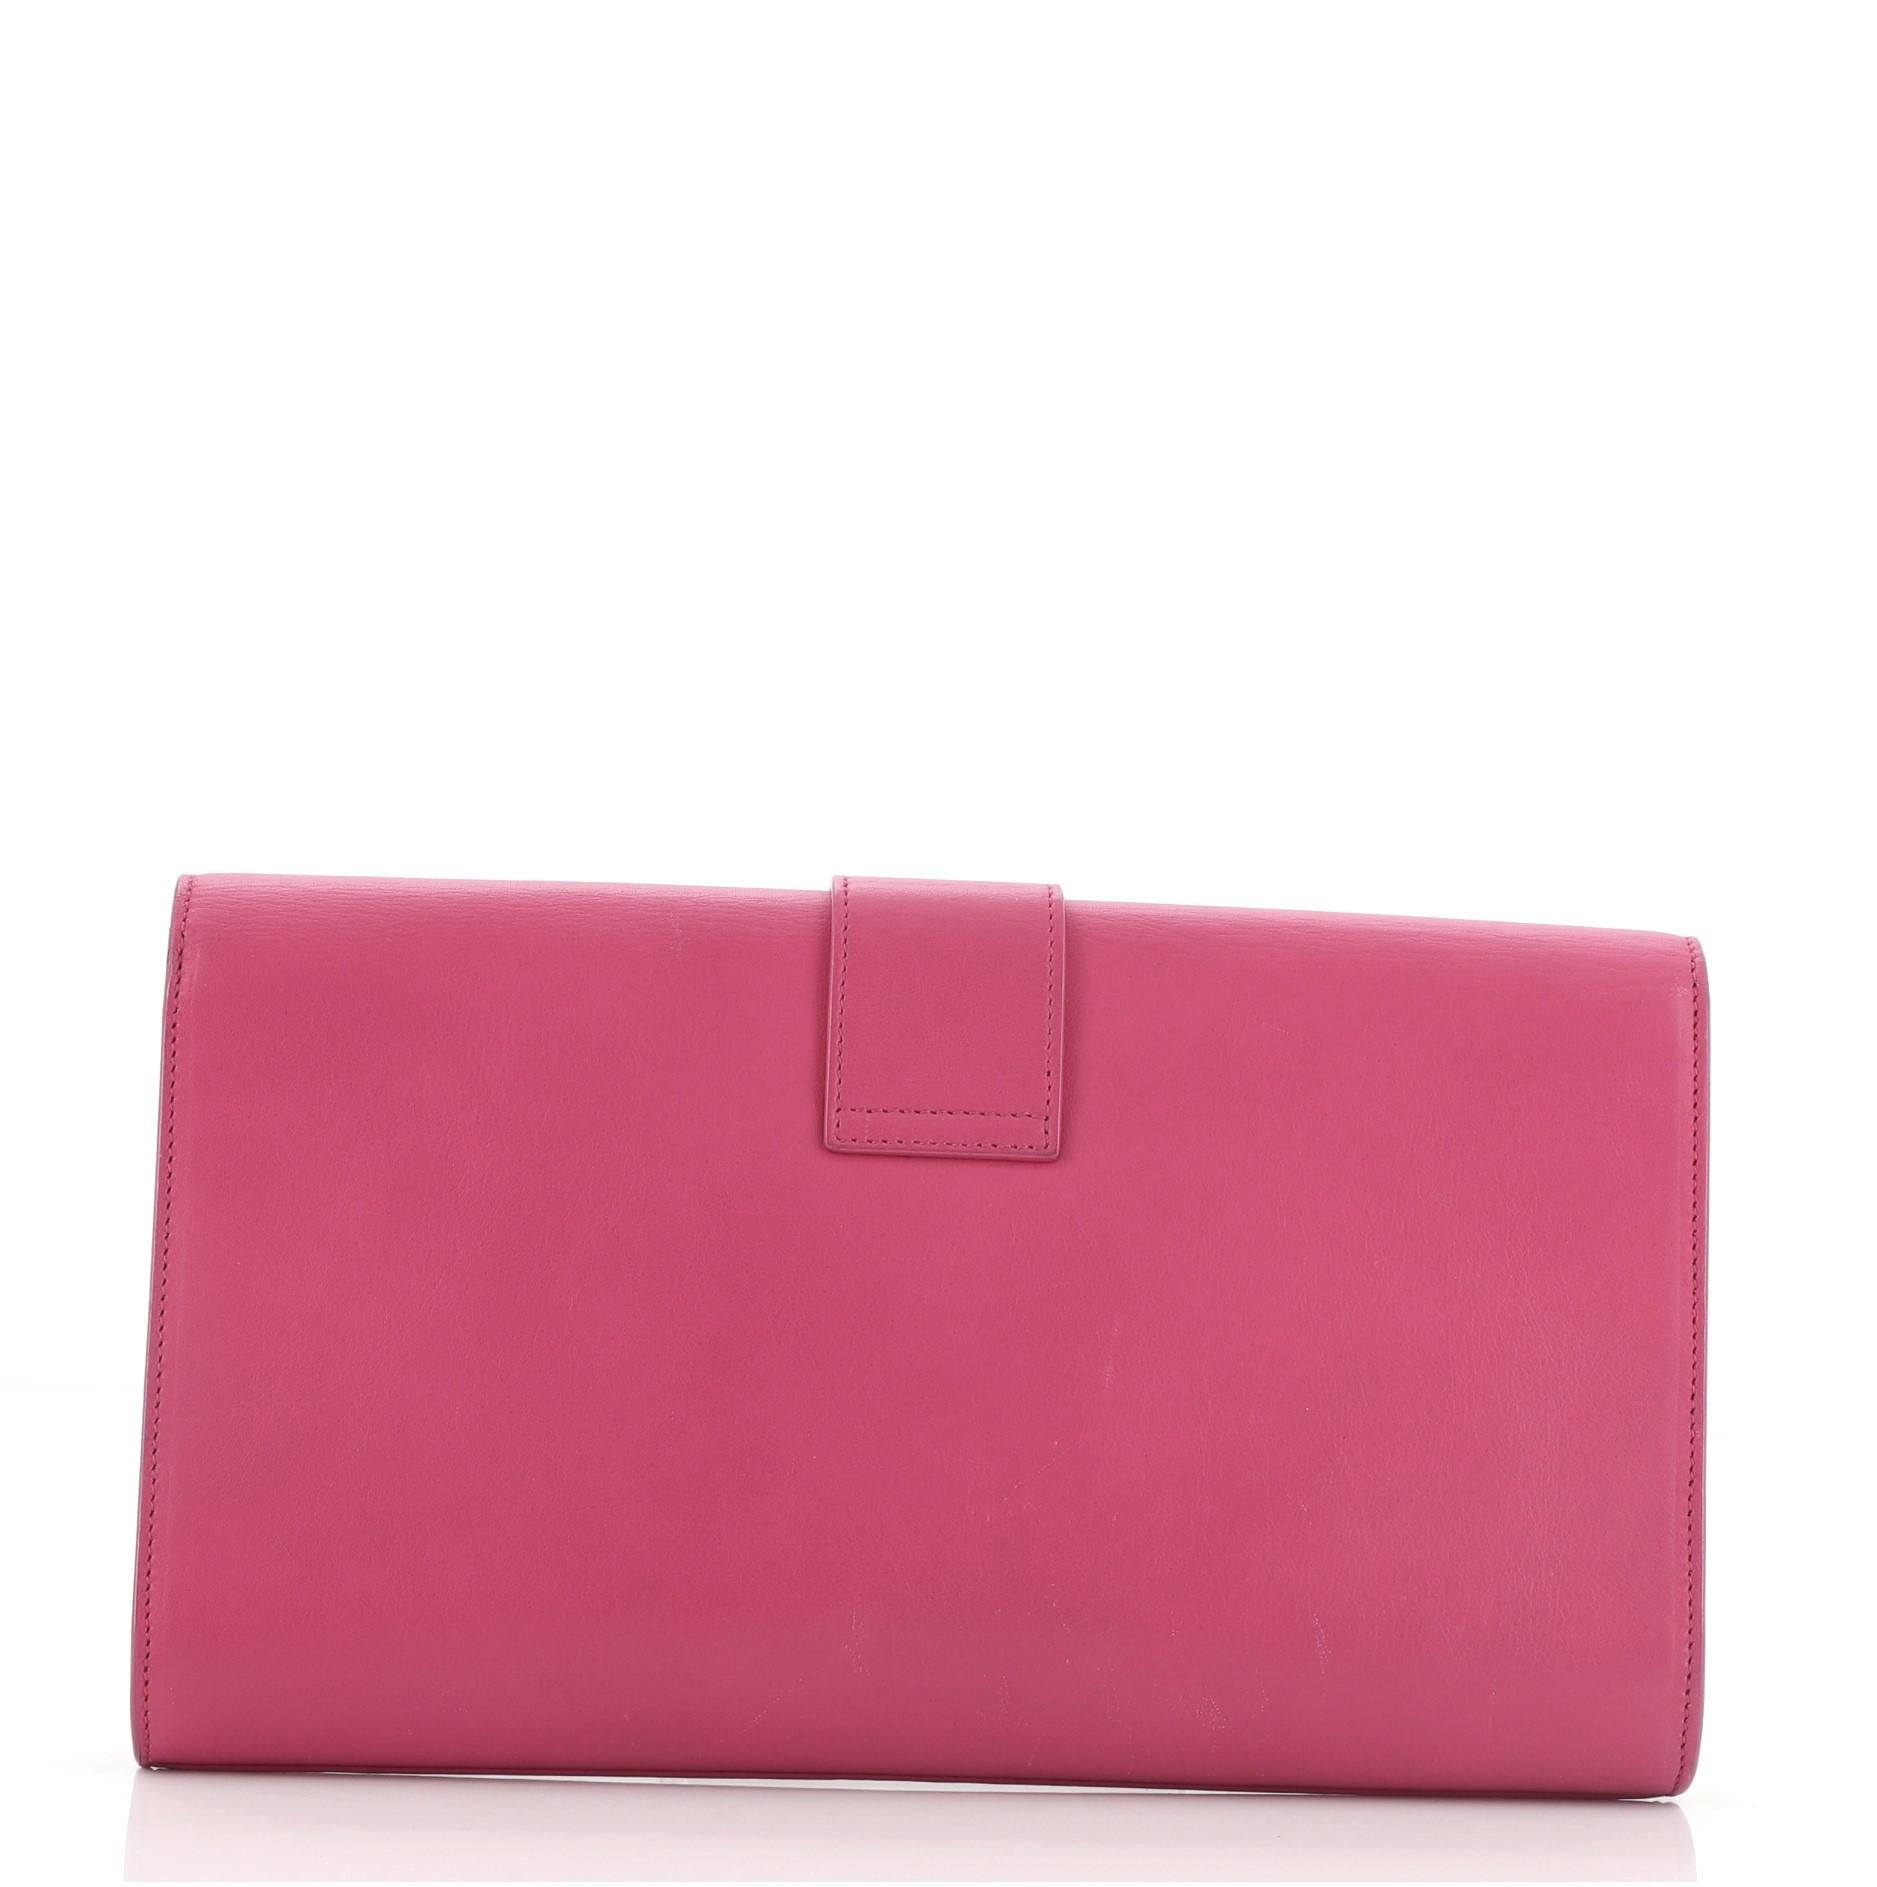 Pink Saint Laurent Chyc Clutch Leather